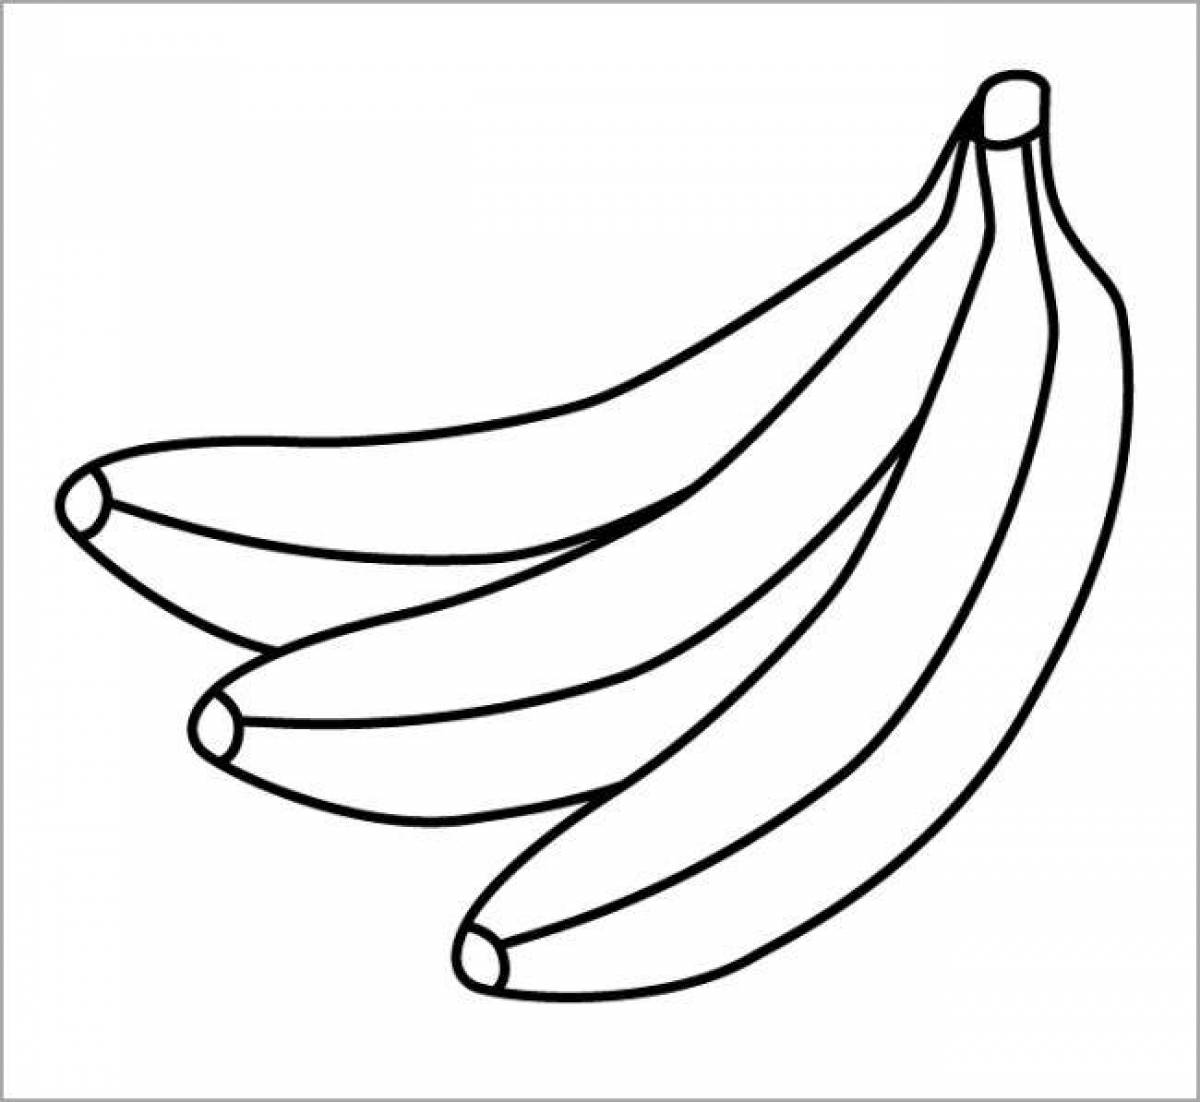 Playful banana coloring book for kids